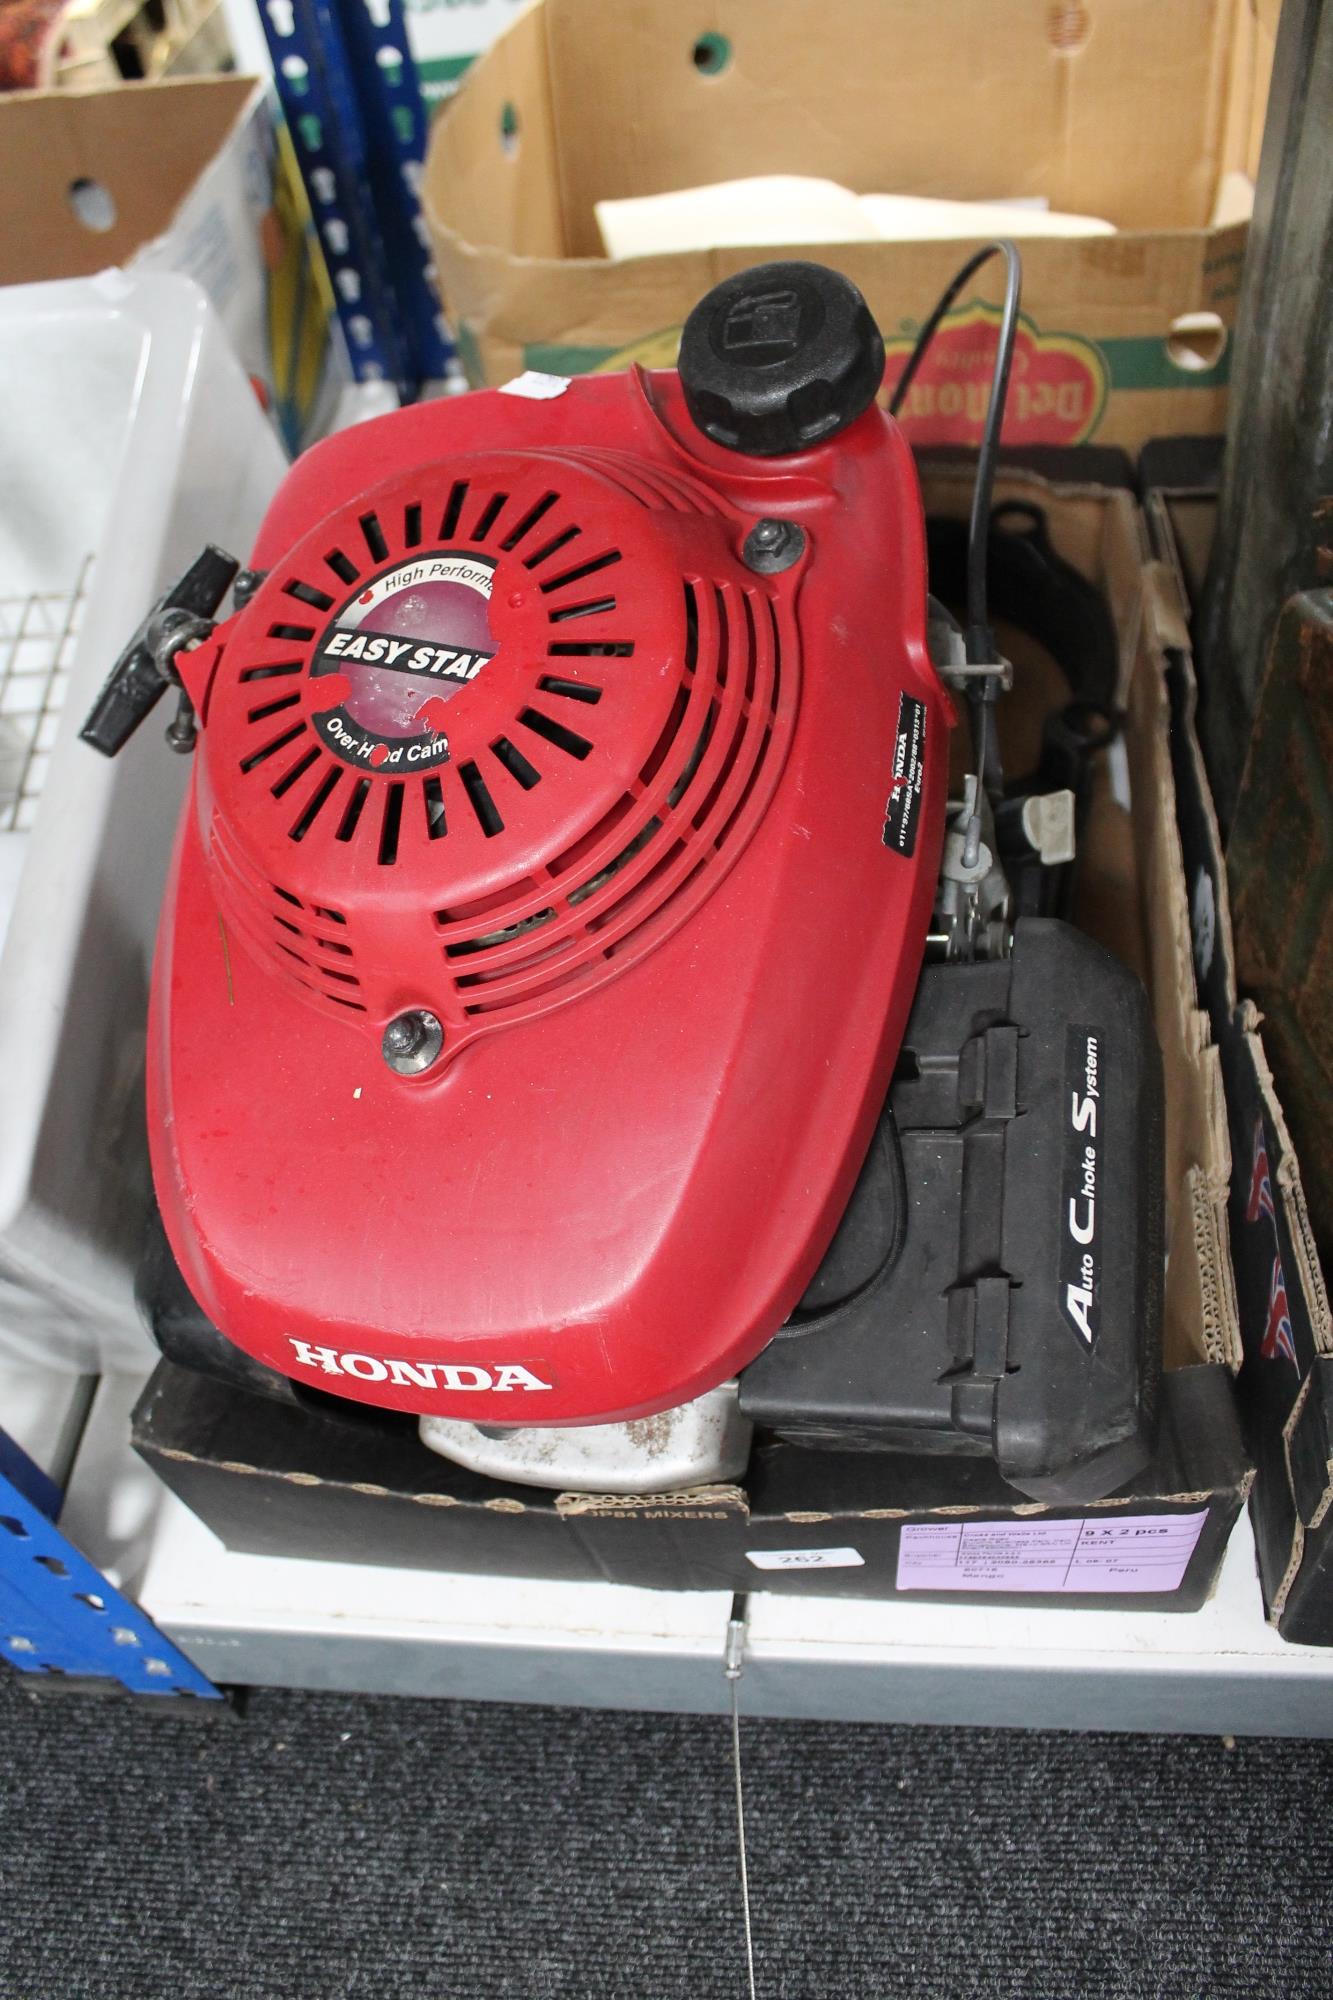 A Honda petrol engine